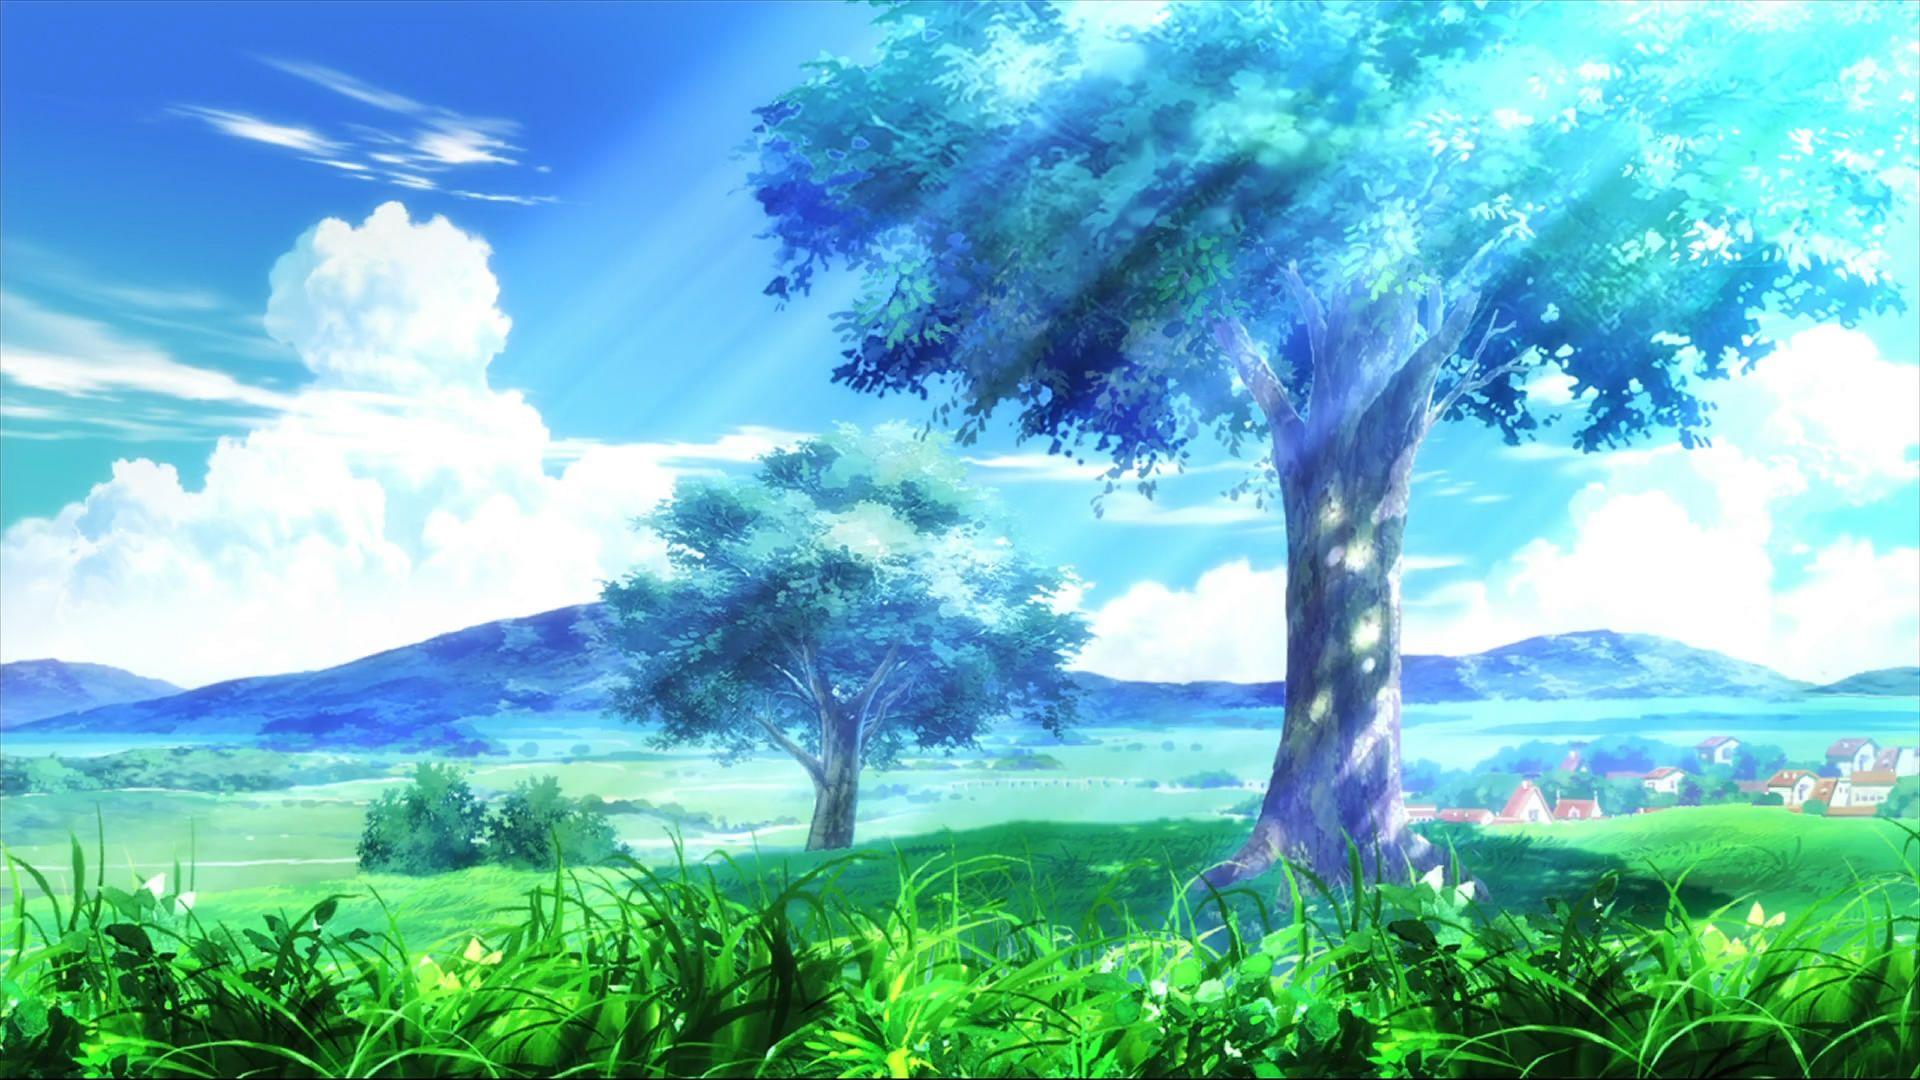 anime scenery. Anime scenery wallpaper, Landscape wallpaper, Anime background wallpaper